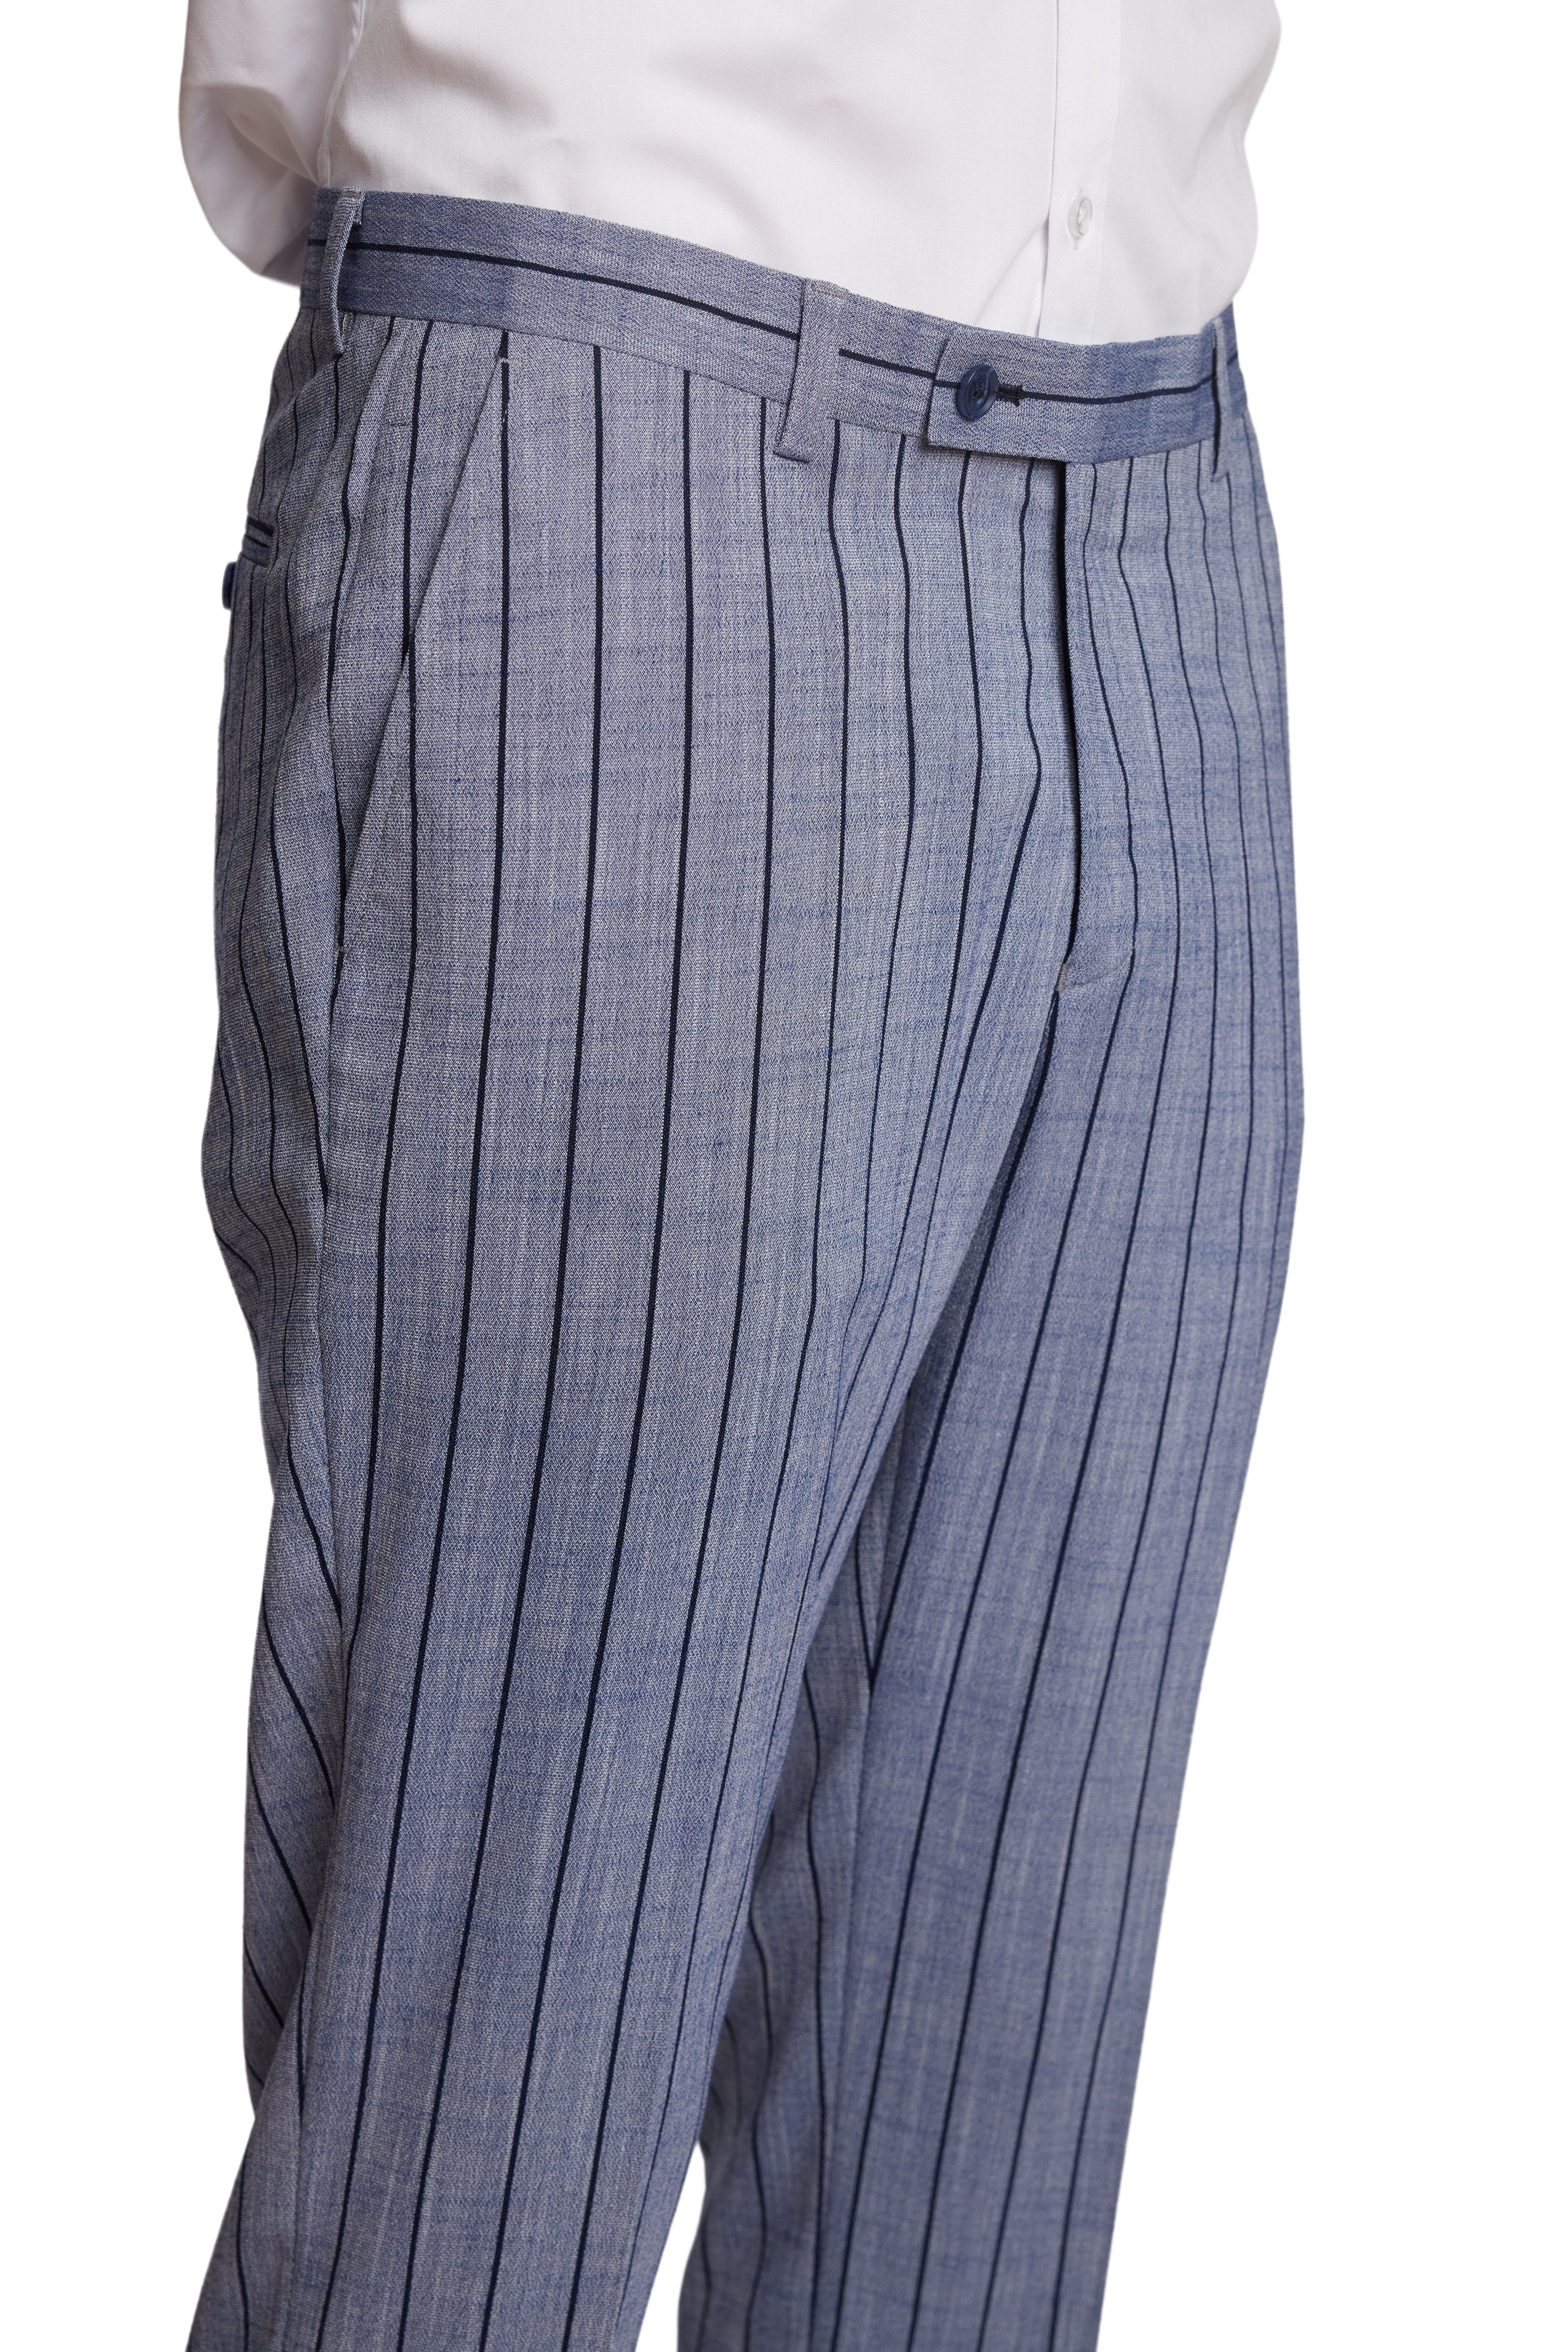 Downing Pants - slim - Blue & Navy Pinstripe